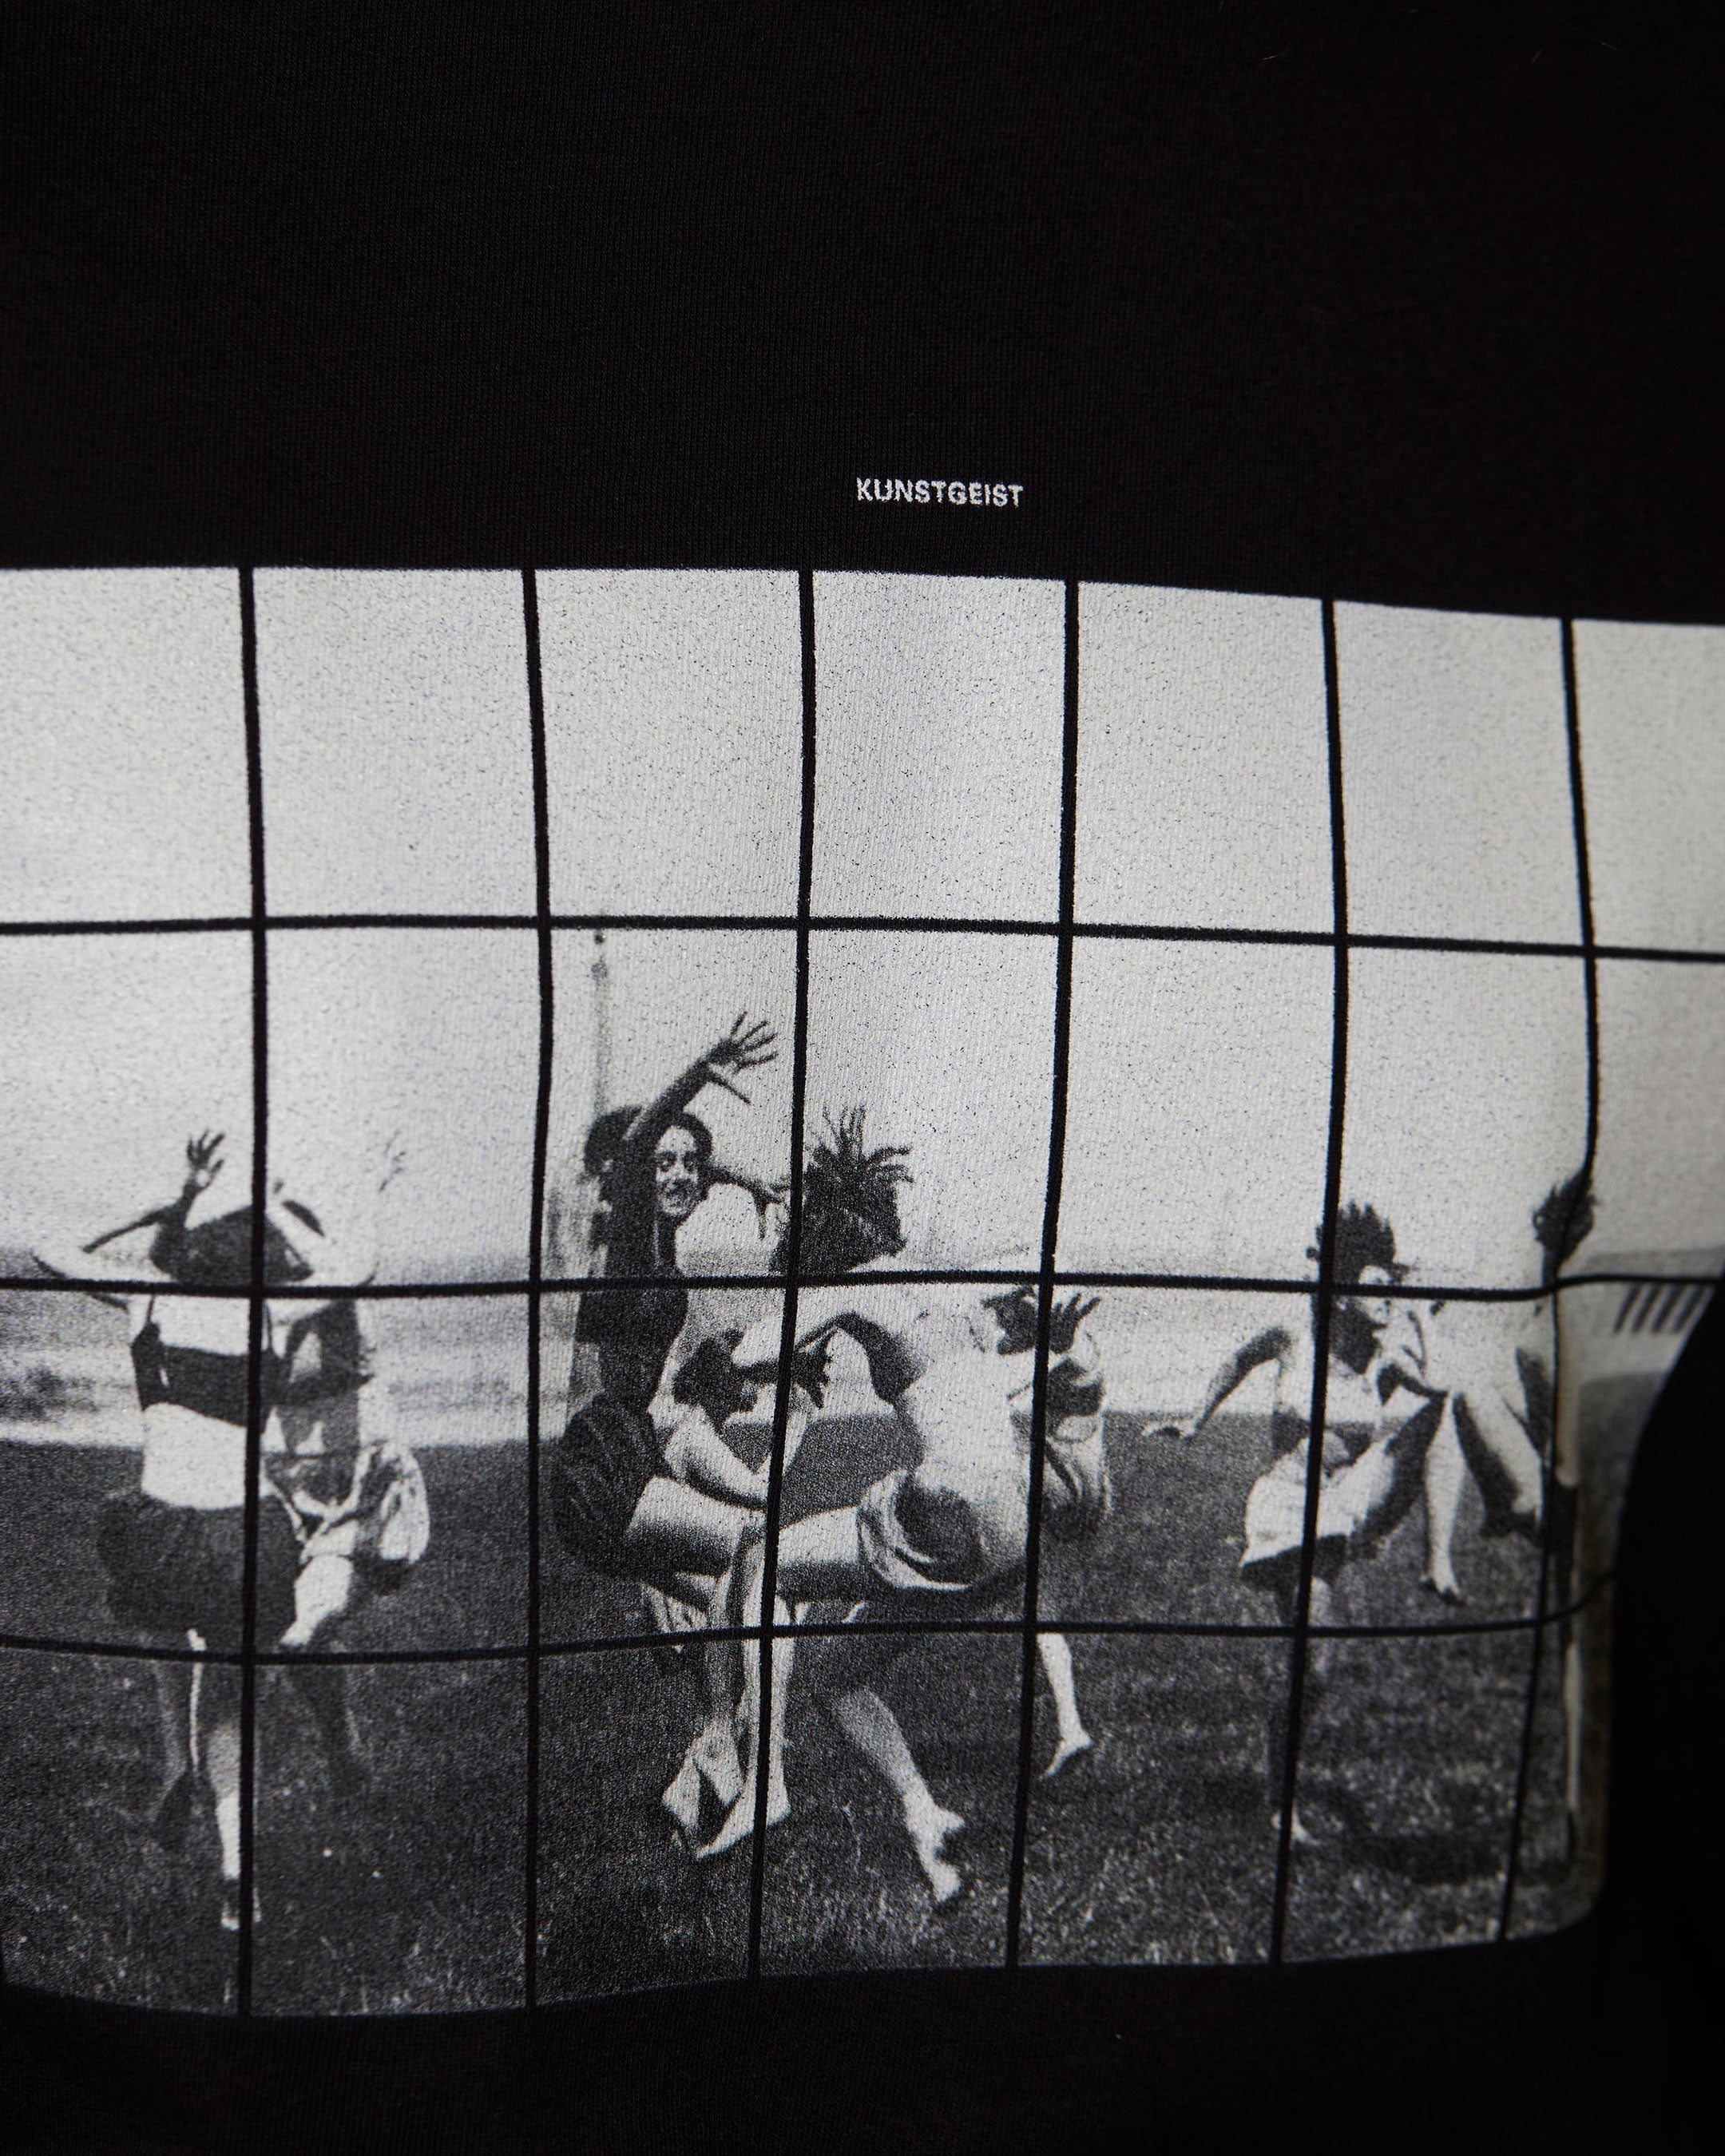 T-shirt bio Dancing Girls Of The Bauhaus